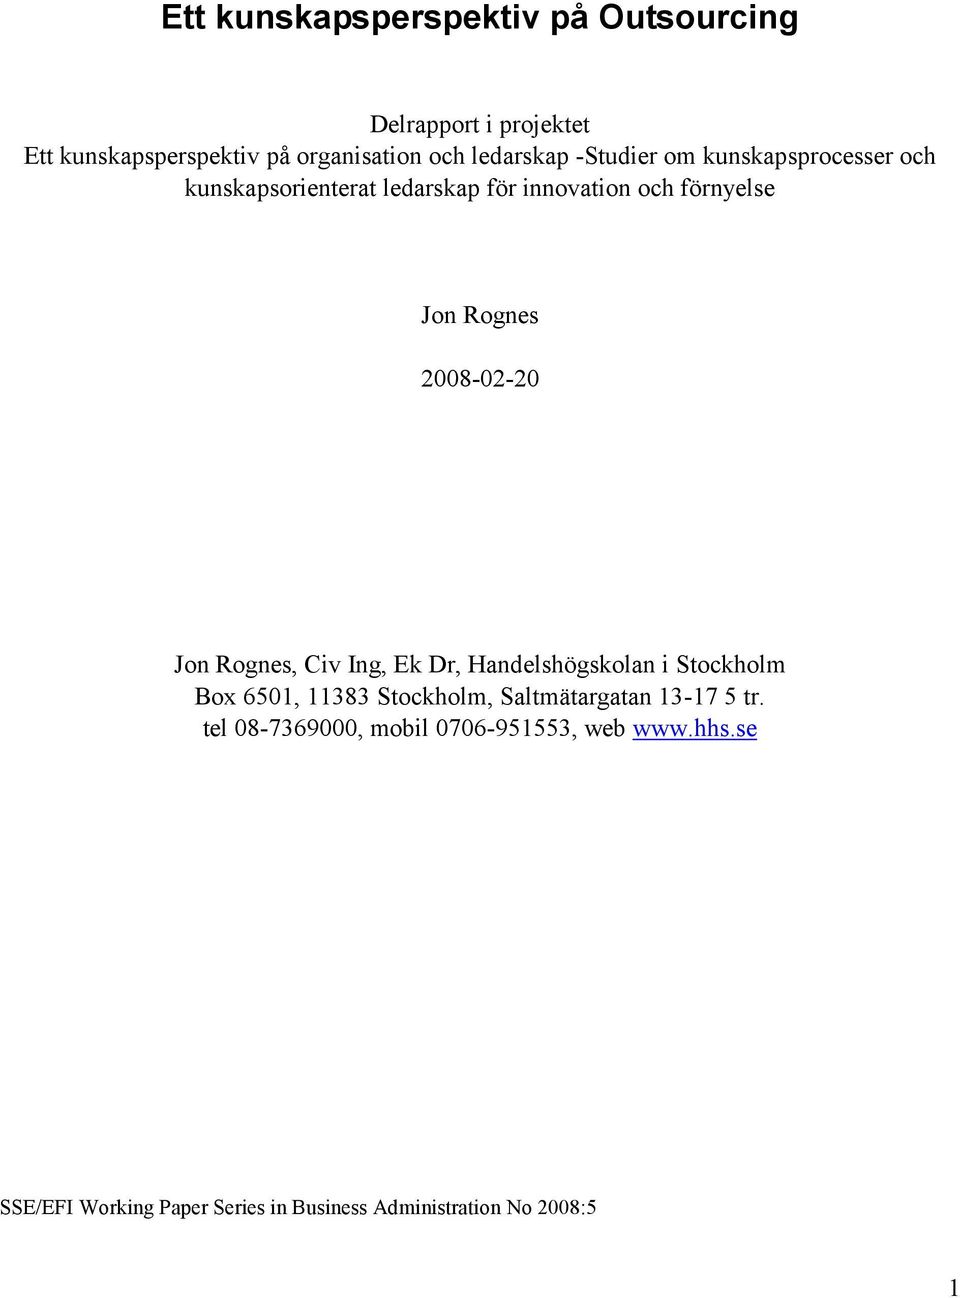 Jon Rognes, Civ Ing, Ek Dr, Handelshögskolan i Stockholm Box 6501, 11383 Stockholm, Saltmätargatan 13-17 5 tr.